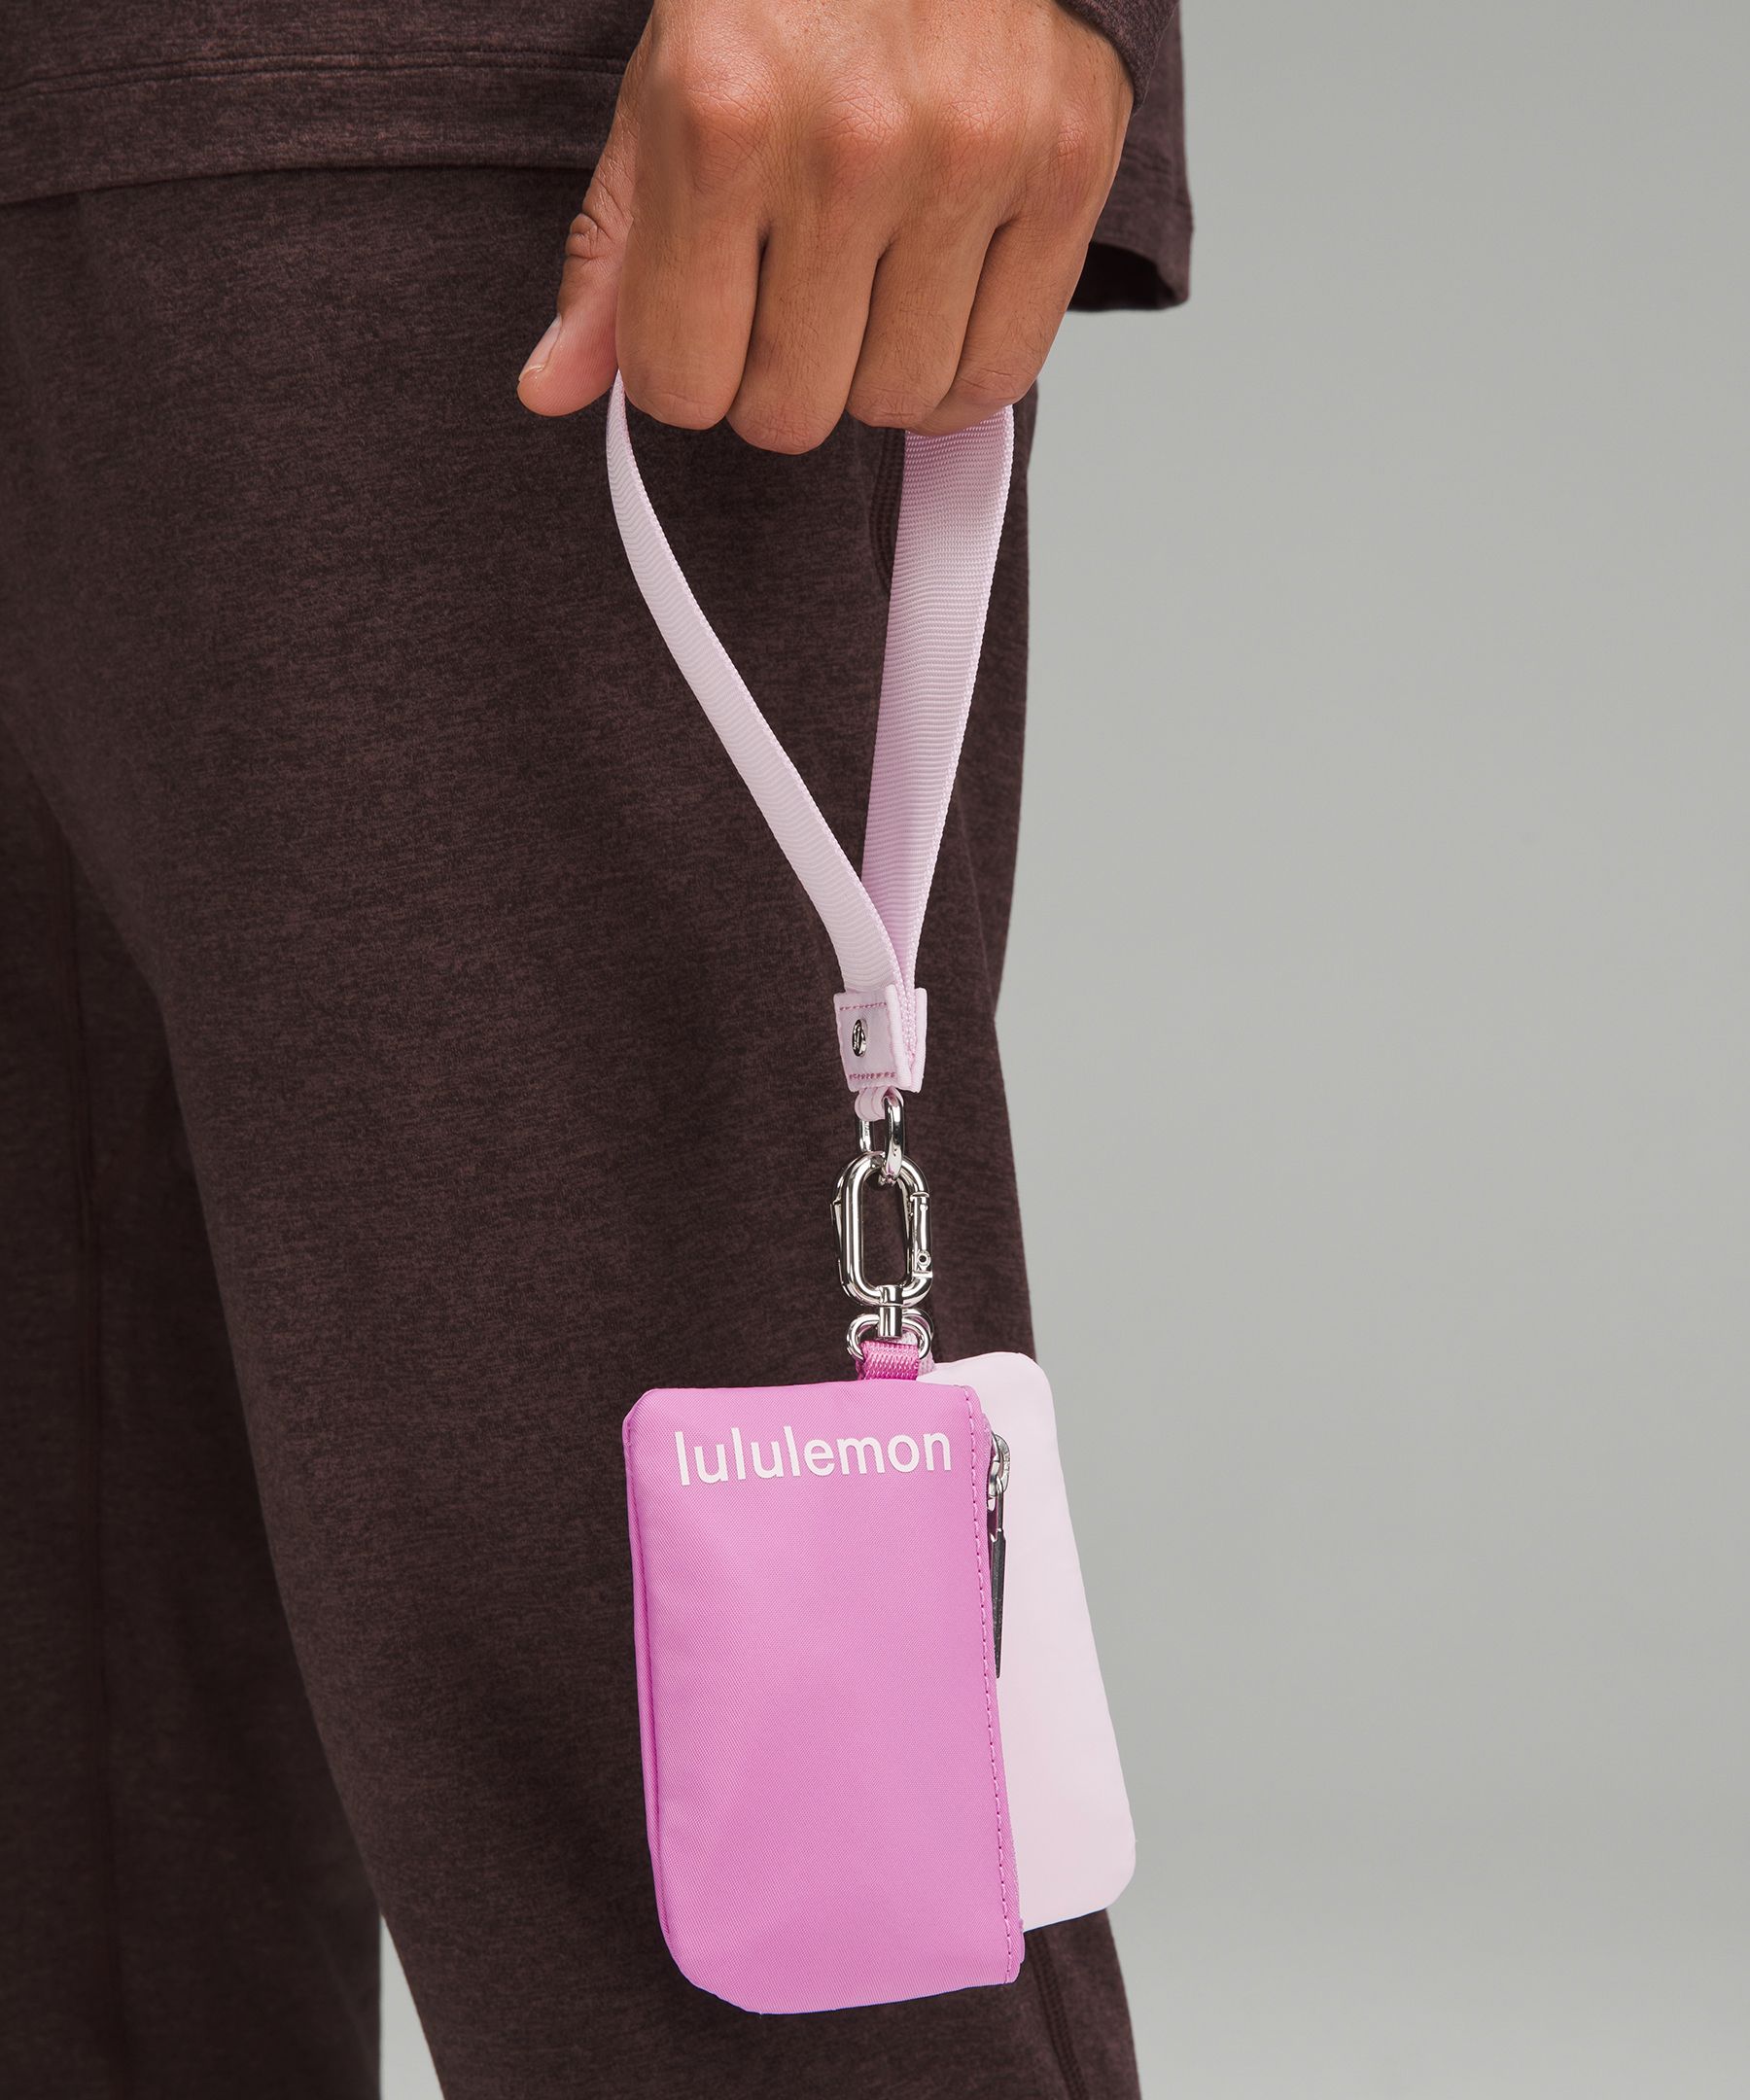 lululemon dual pouch wristlet  Handbag essentials, Girly accessories, Cute  car accessories